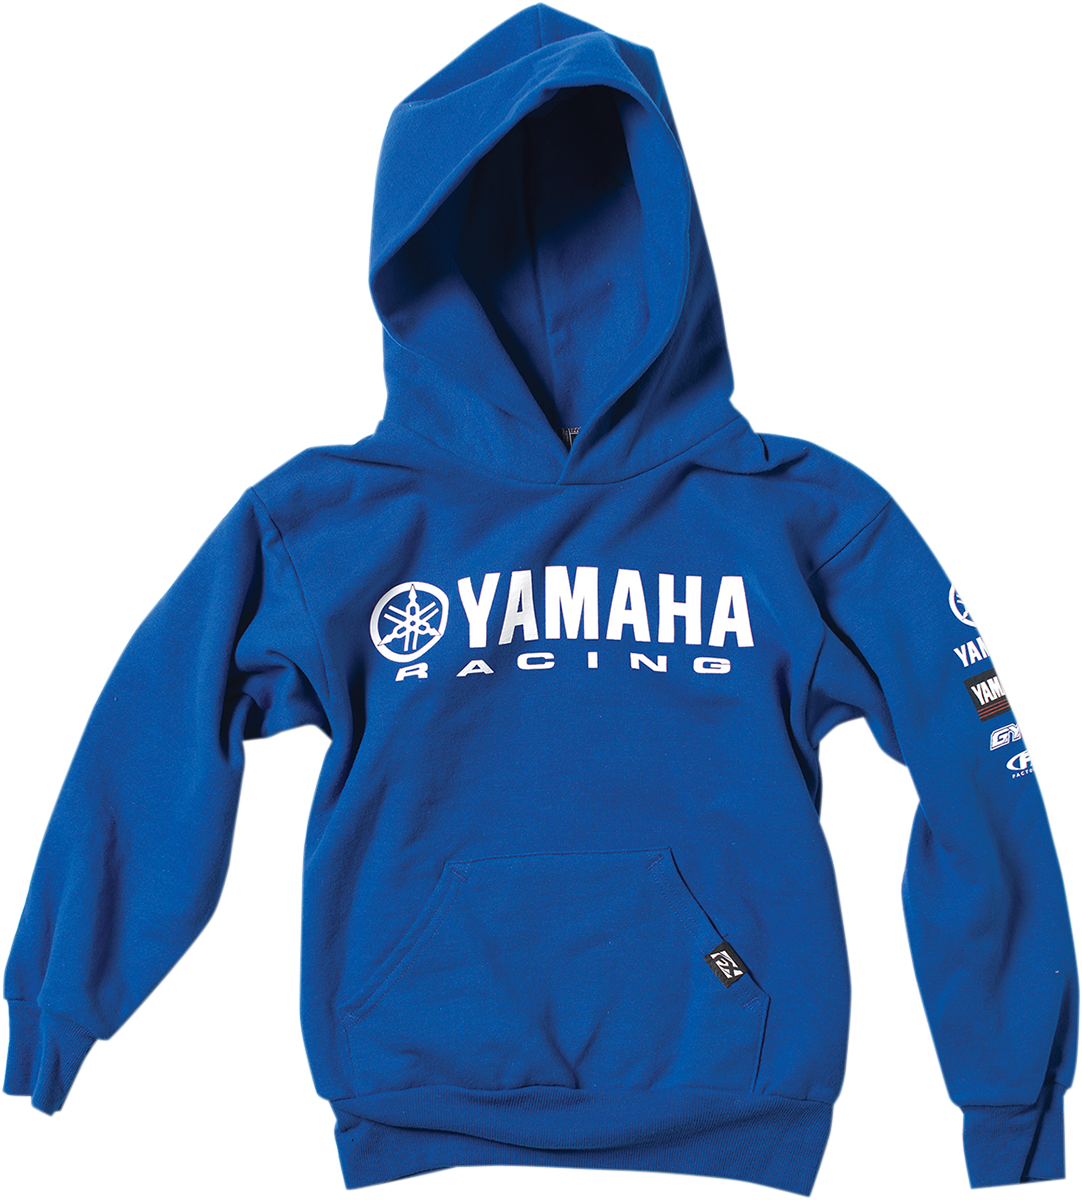 FACTORY EFFEX Youth Yamaha Racing Hoodie - Blue - XL 19-83236